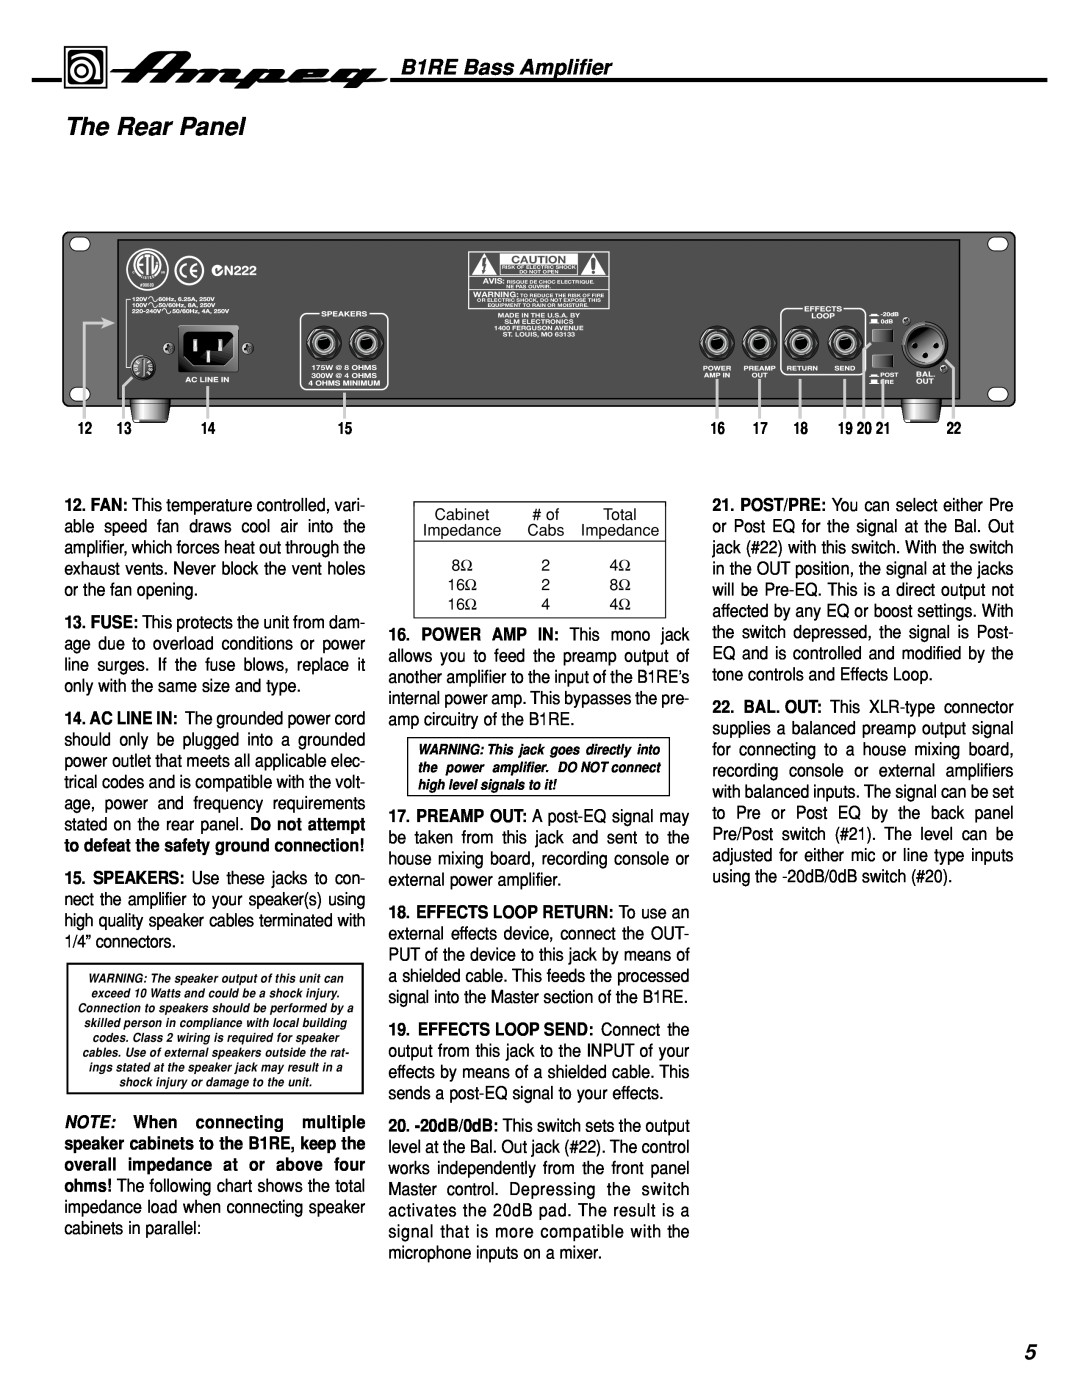 Ampeg manual The Rear Panel, B1RE Bass Amplifier, 19 20 